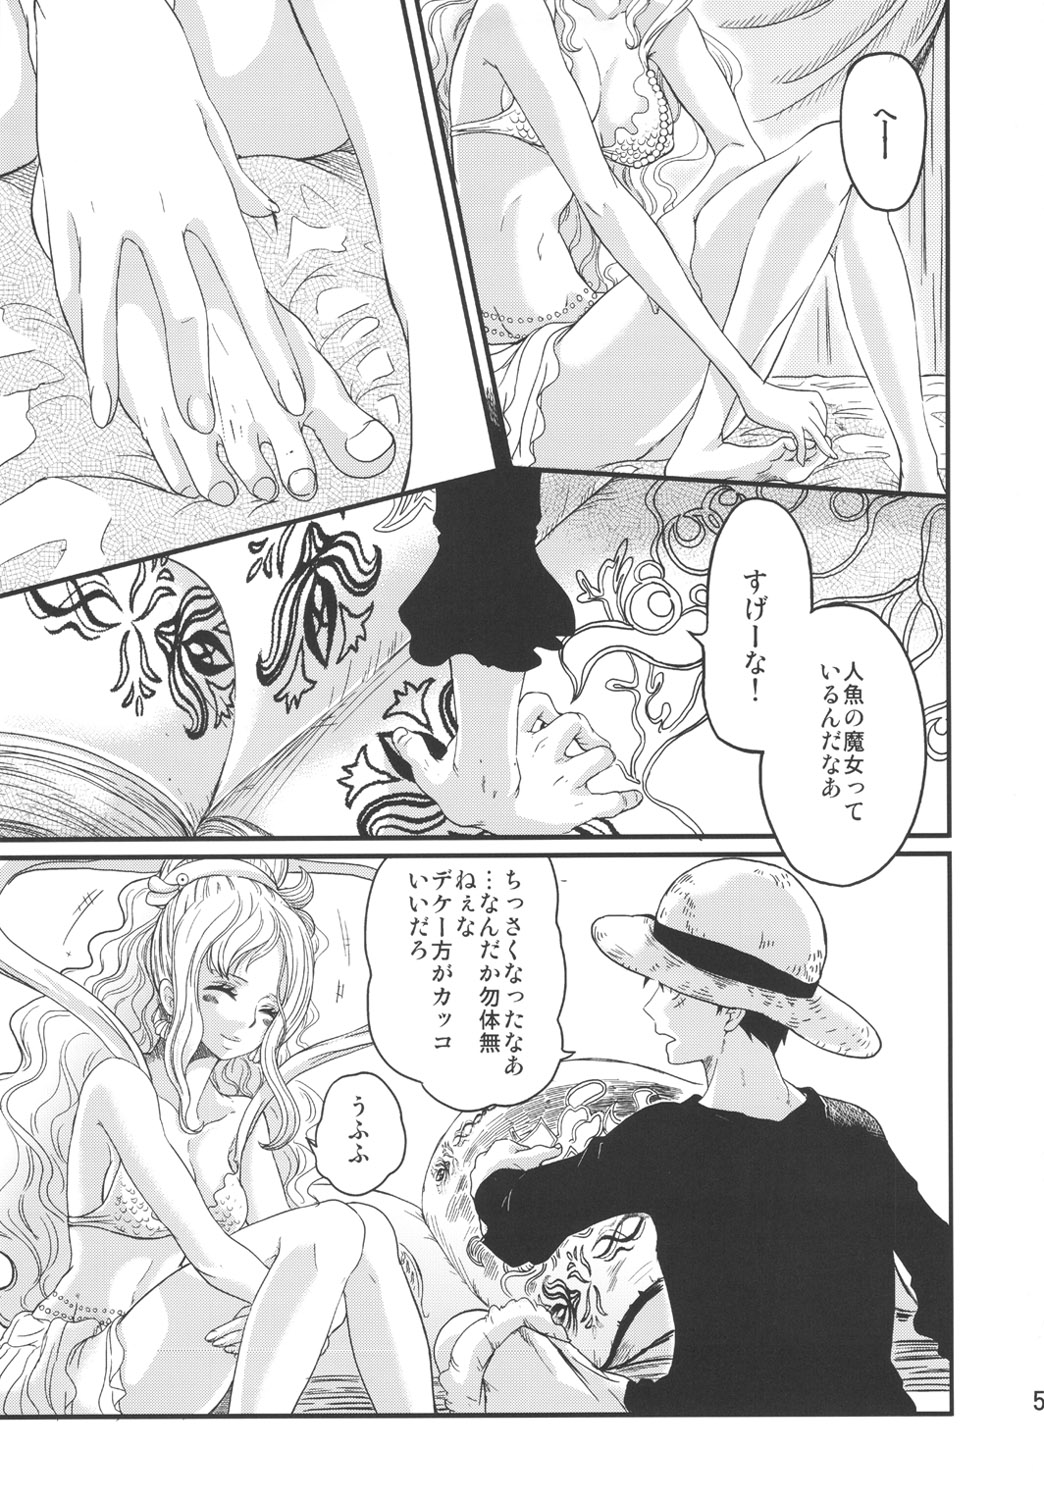 Read C Queen Of VANILLA Tigusa Suzume Ningyohime One Piece Hentai Porns Manga And